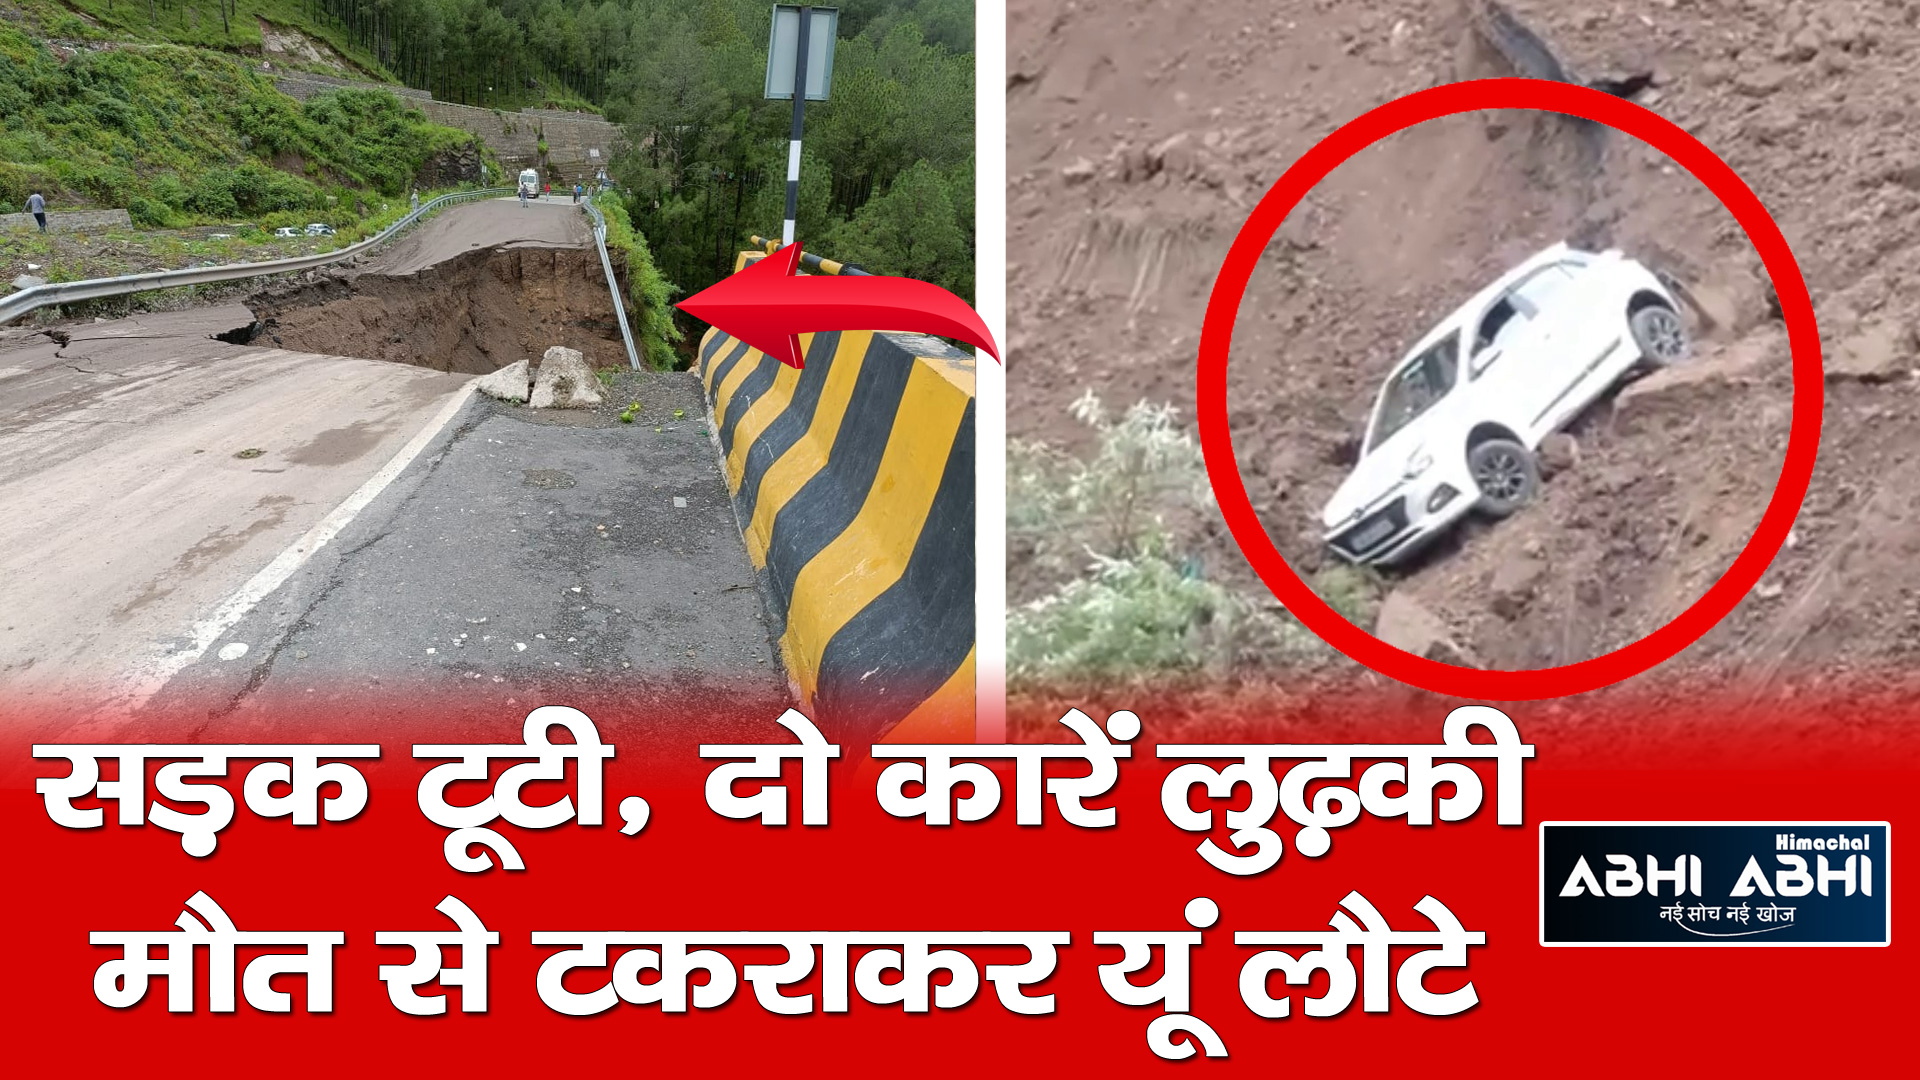 Road collapsed/ Two cars/ Shimla-Kalka four lane